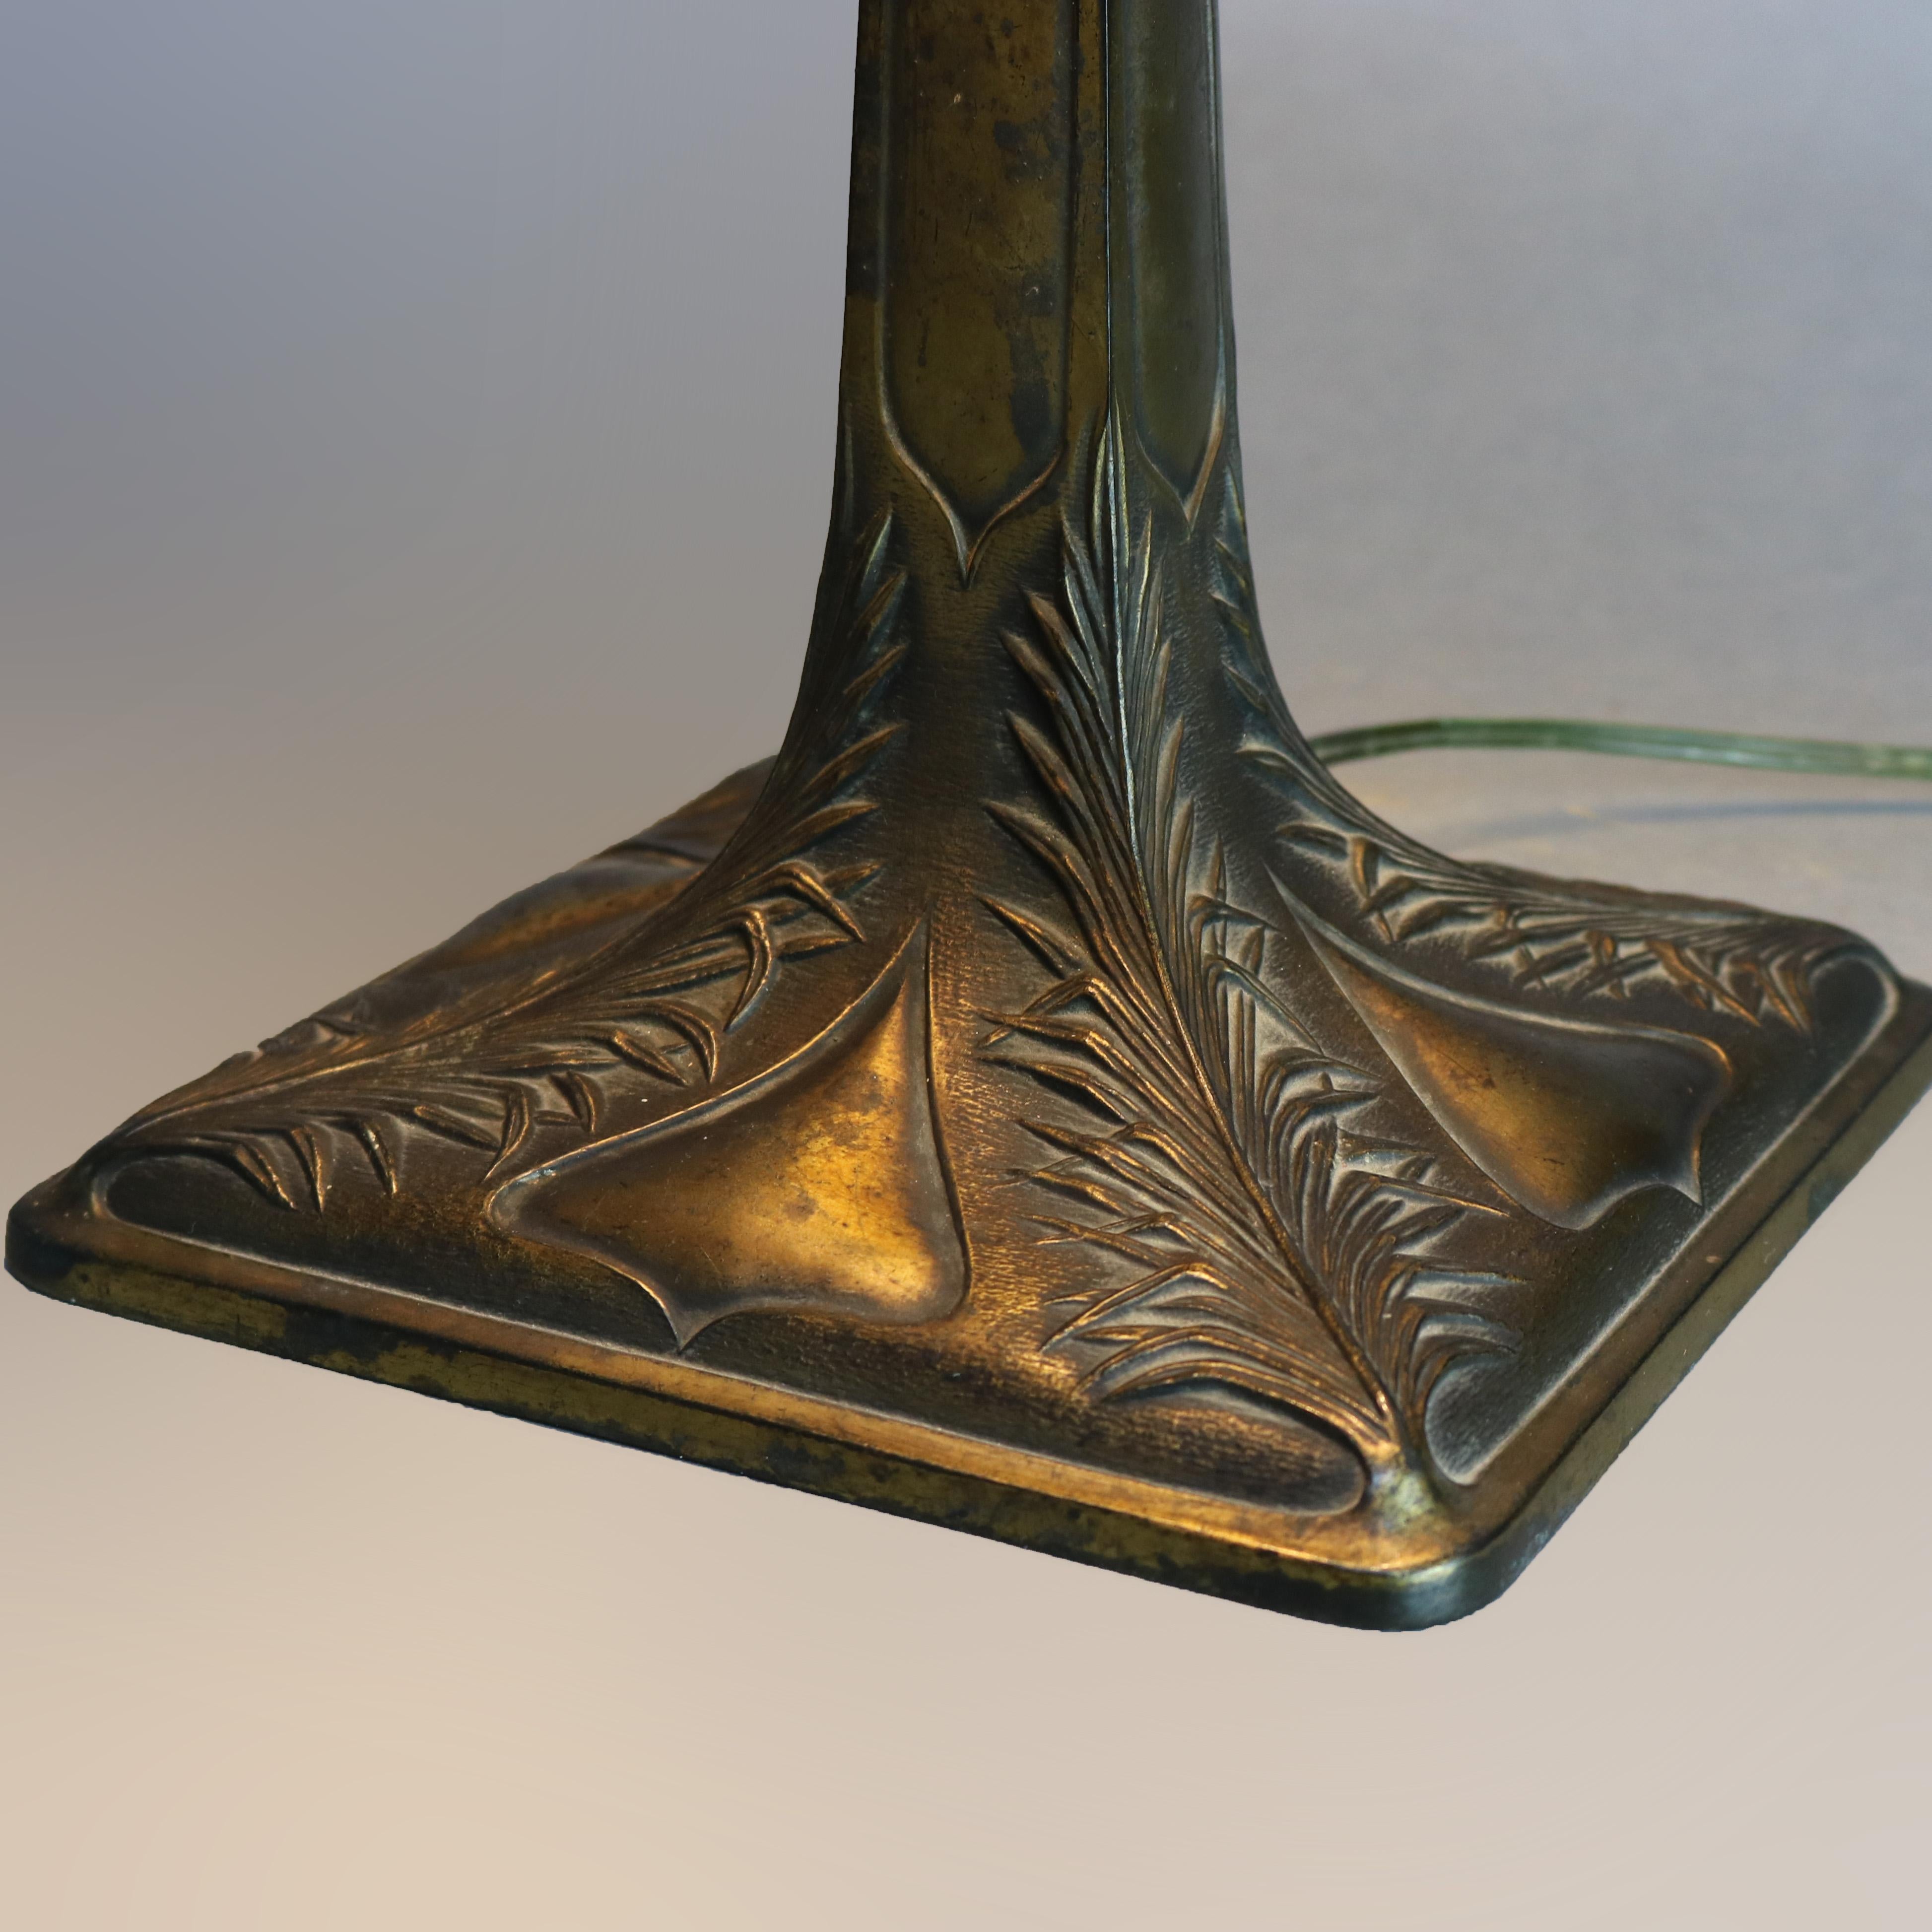 20th Century Antique Arts & Crafts Bradley & Hubbard Slag Glass Table Lamp, circa 1920